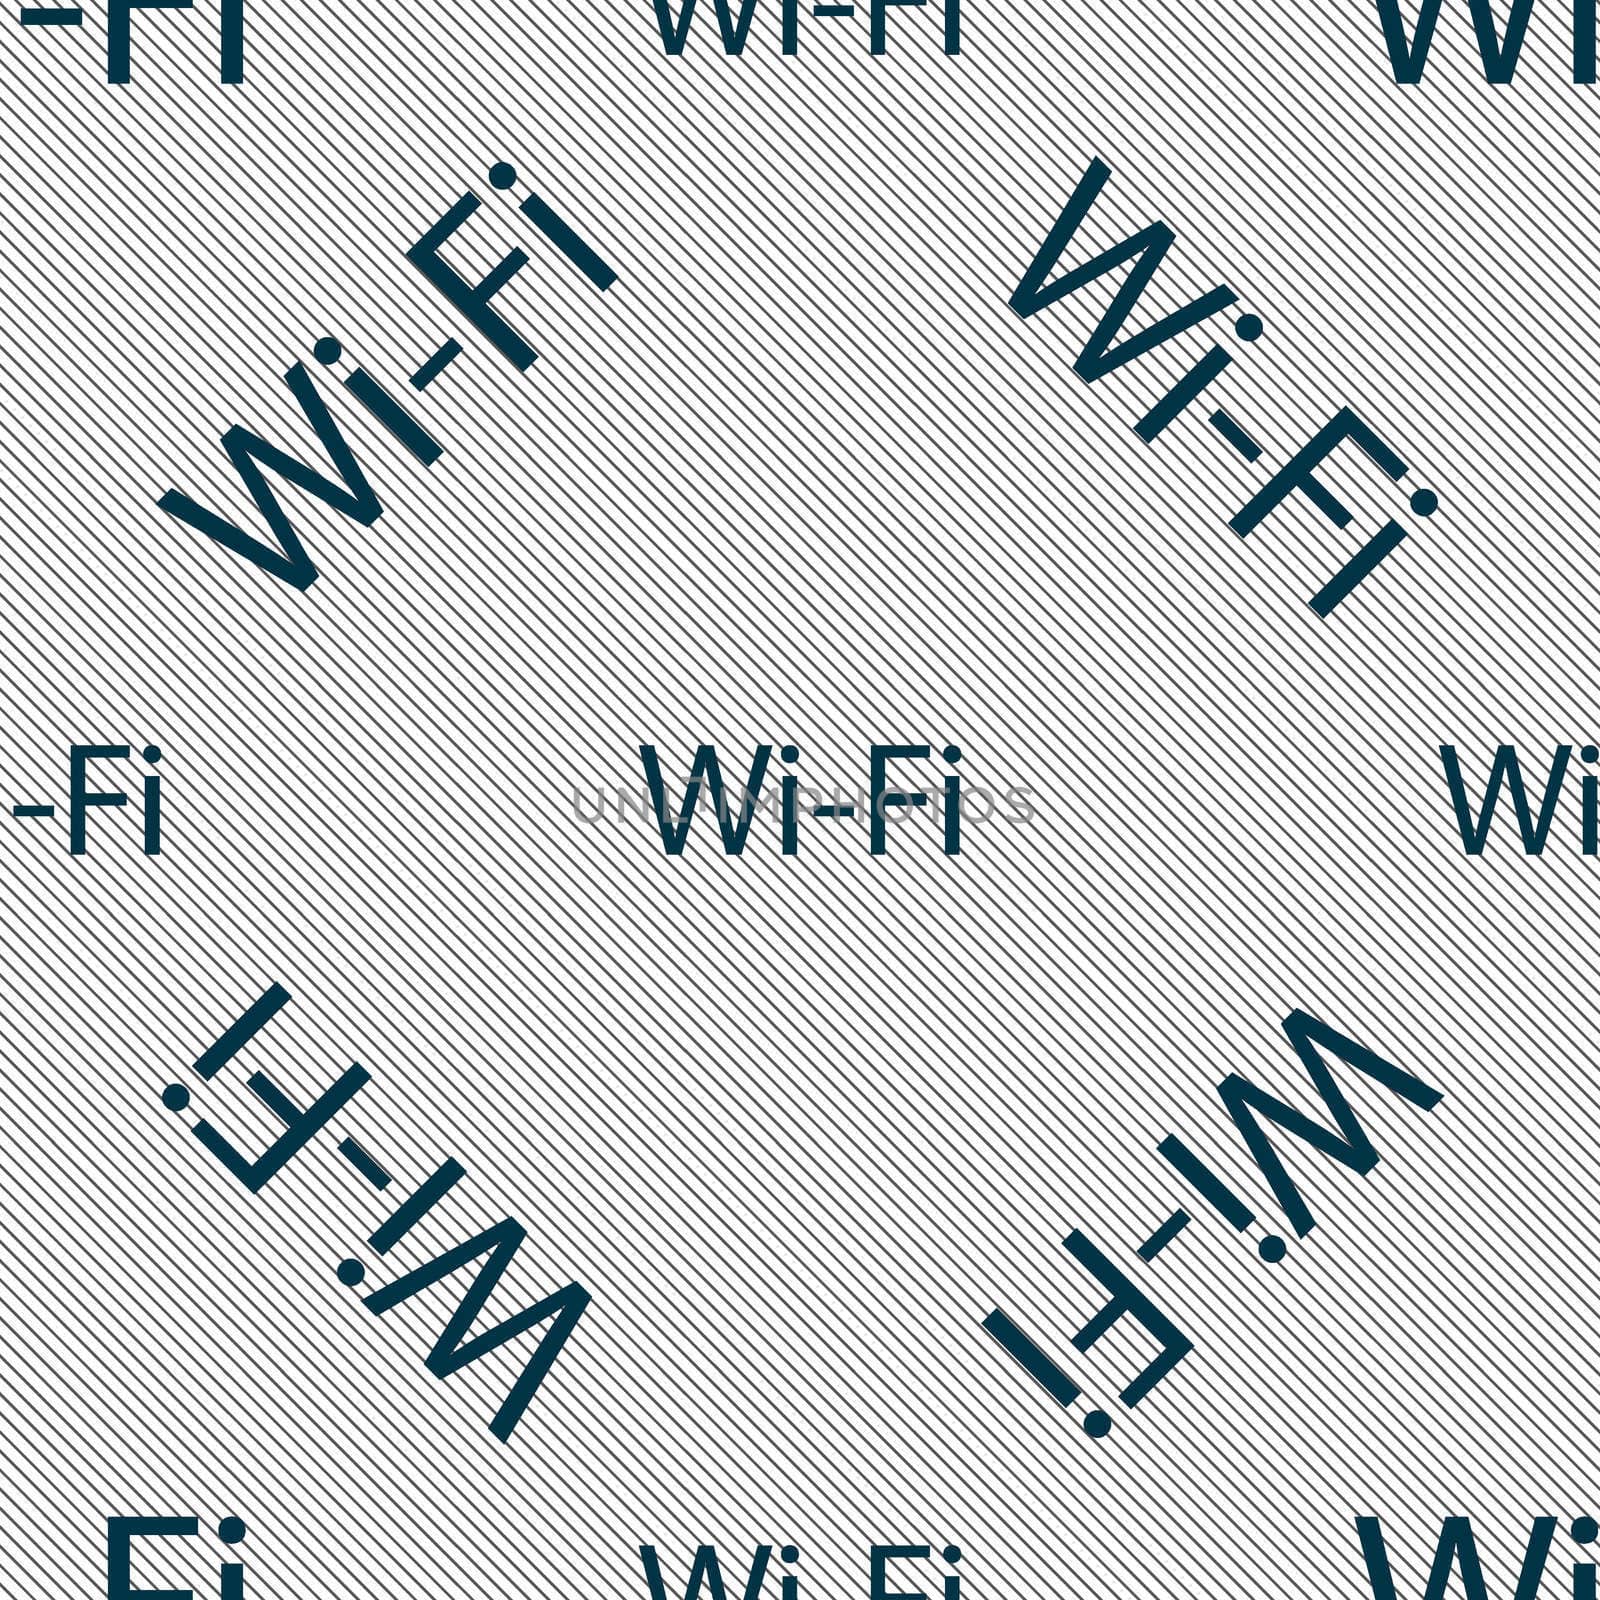 Free wifi sign. Wi-fi symbol. Wireless Network icon. Seamless pattern with geometric texture. illustration